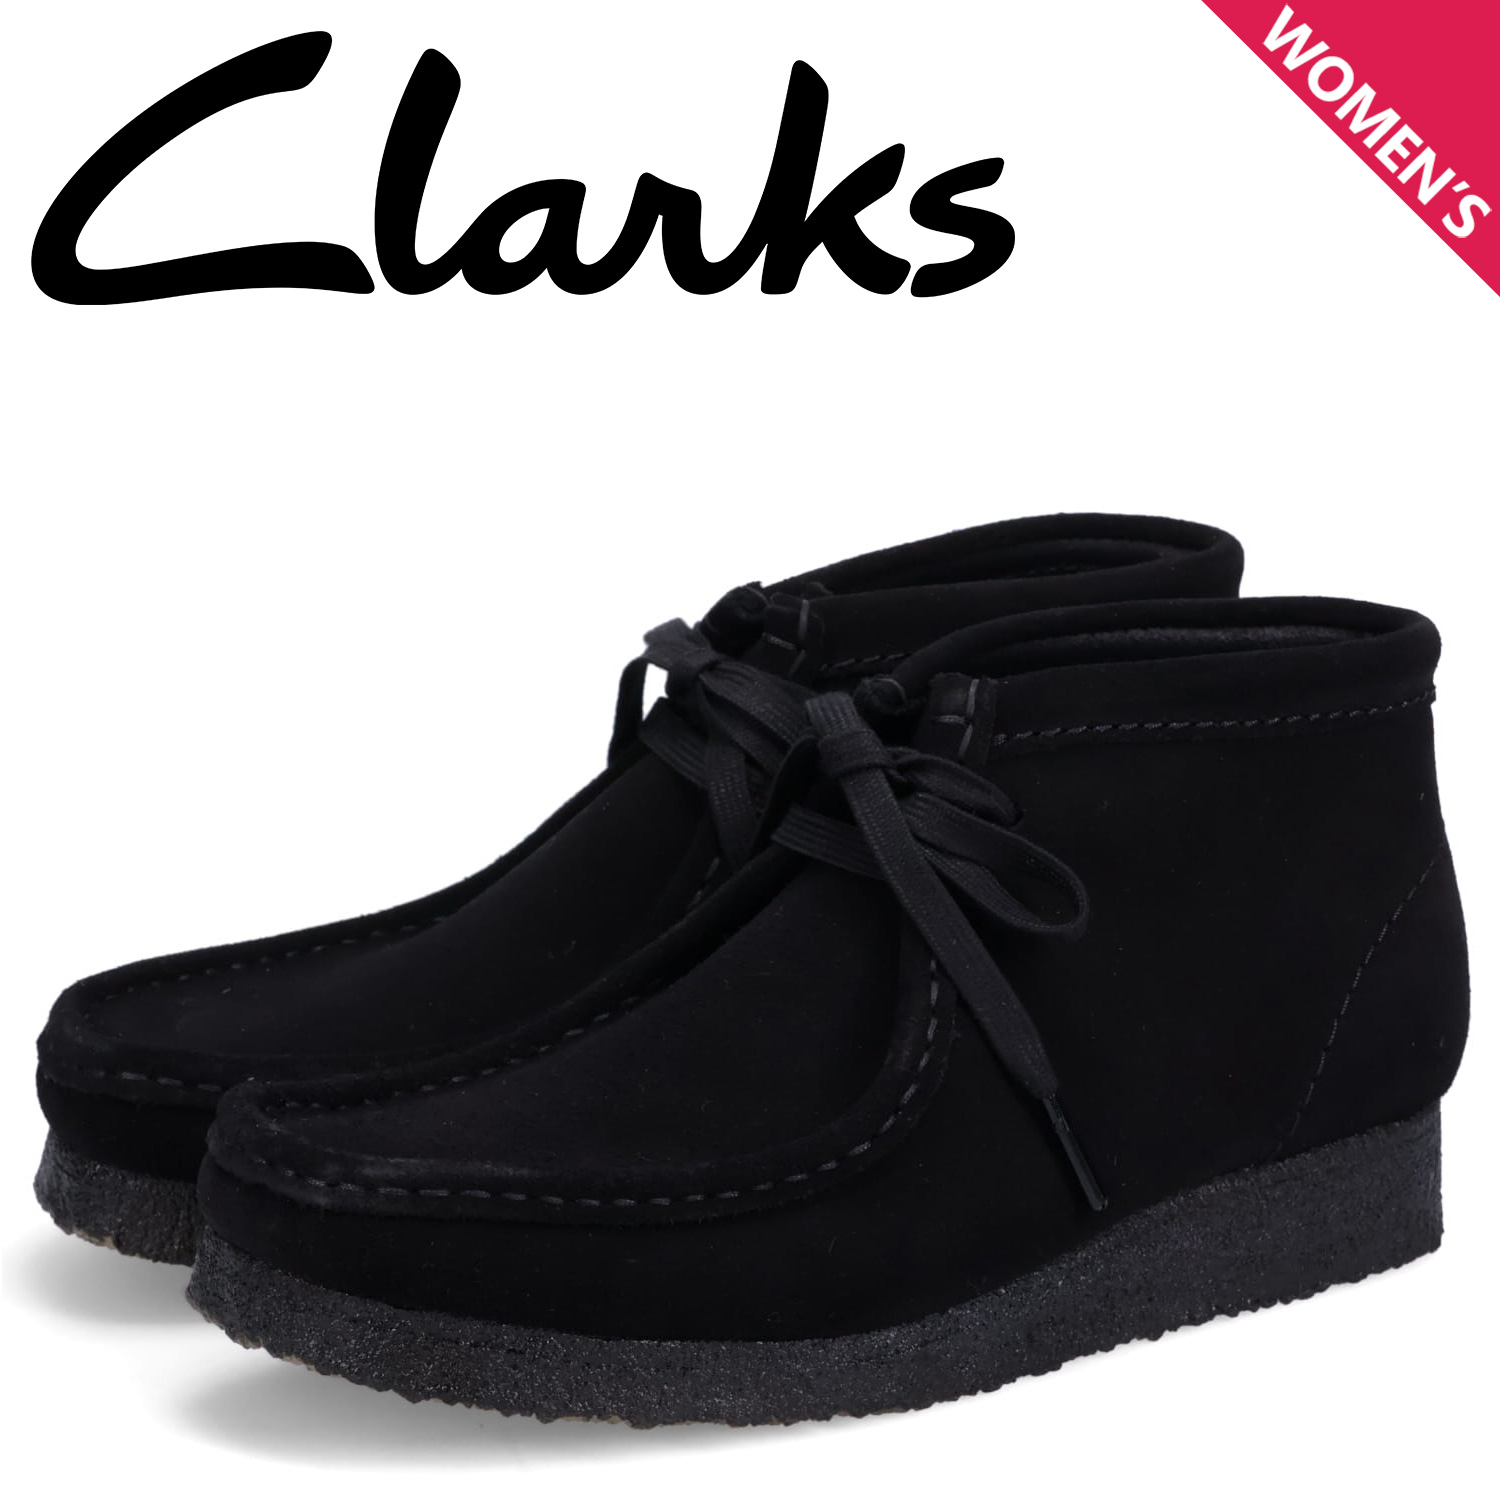 Clarks Originals Clarks оригинал z ботинки wala Be ботинки женский WALLABEE BOOTS черный чёрный 26155521